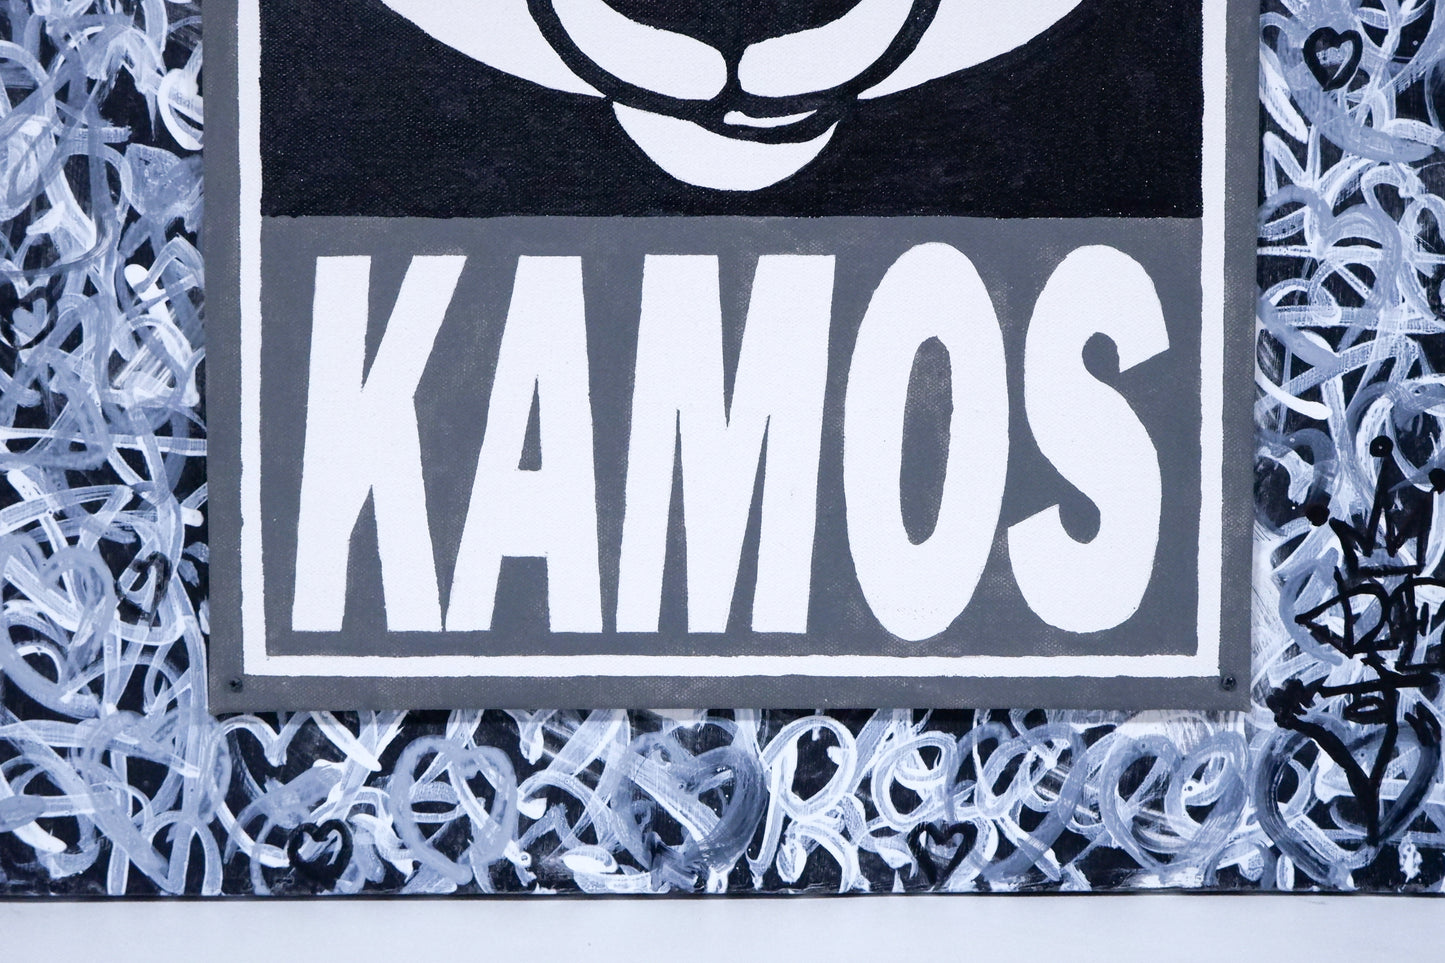 KAMOS GRAY BOX LOGO | ORIGINAL ART WORK